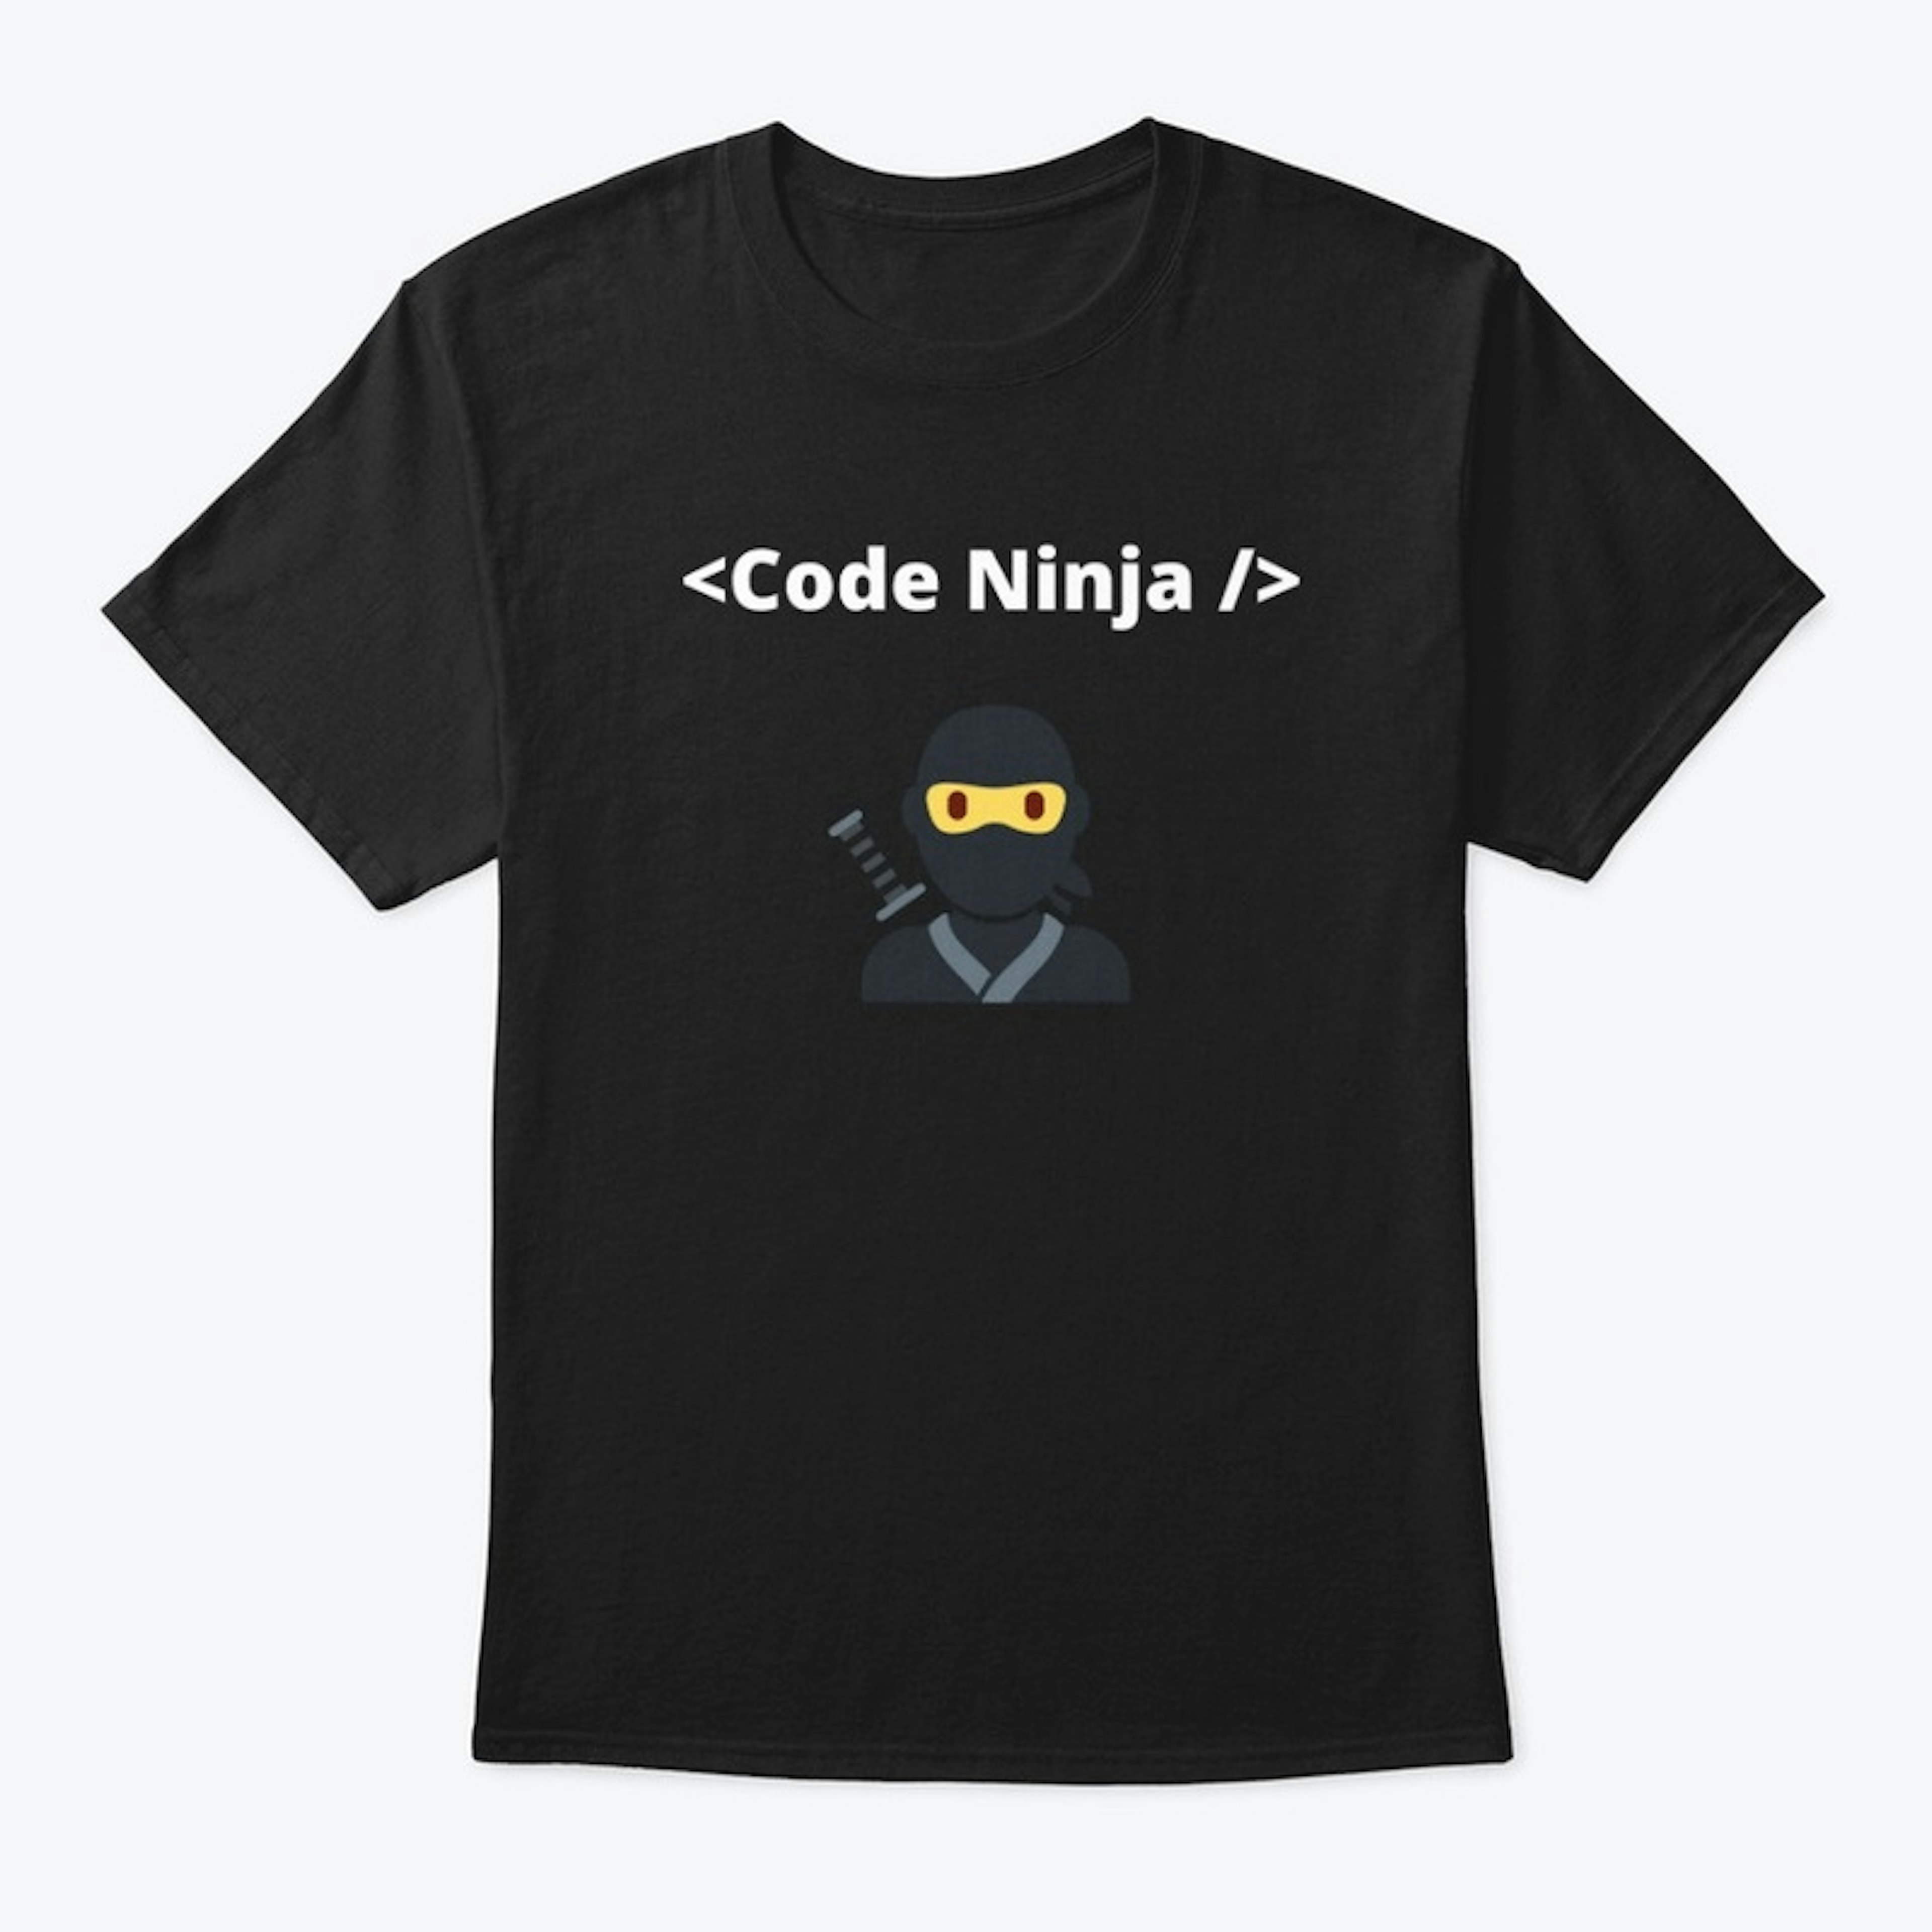 Code ninja